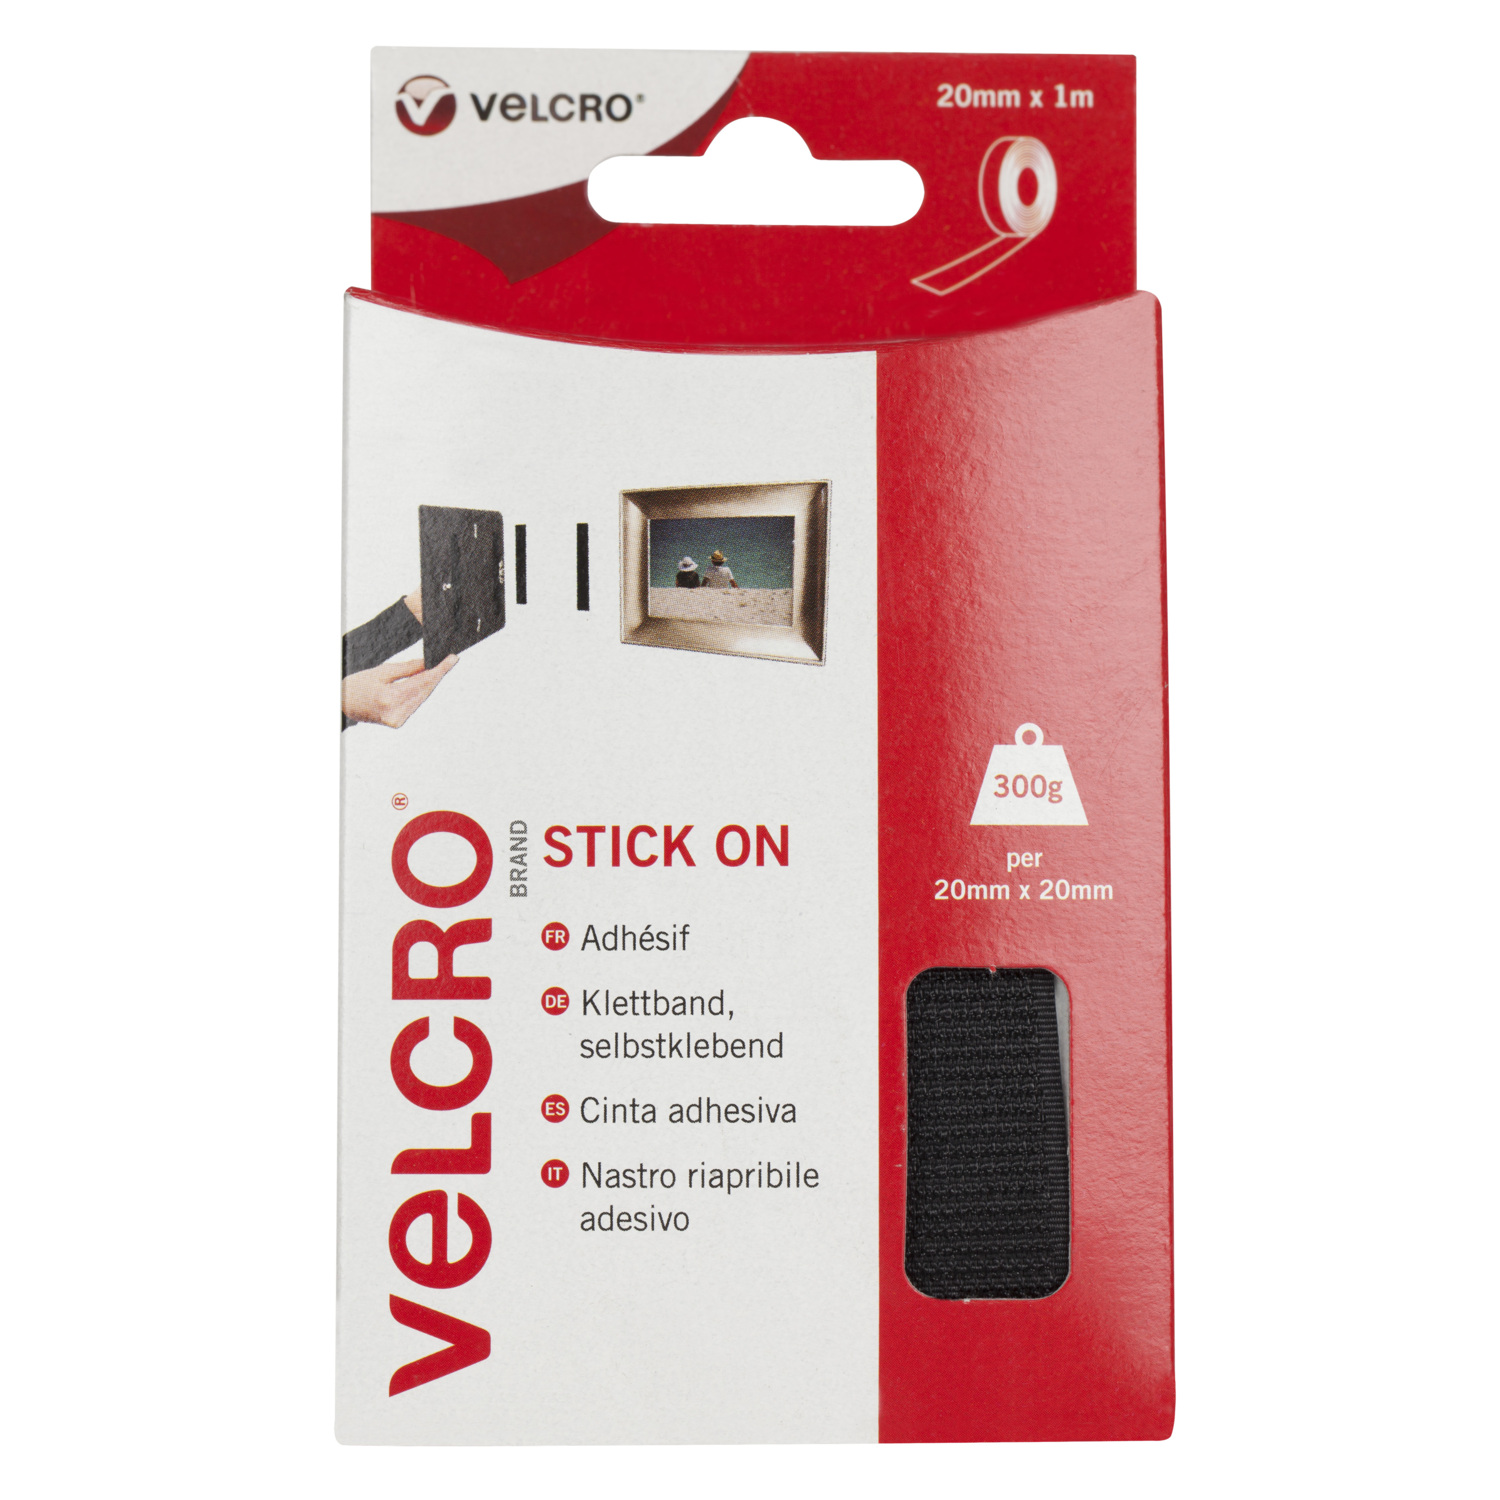 VELCRO Brand Stick-On Tape Strips - Black Image